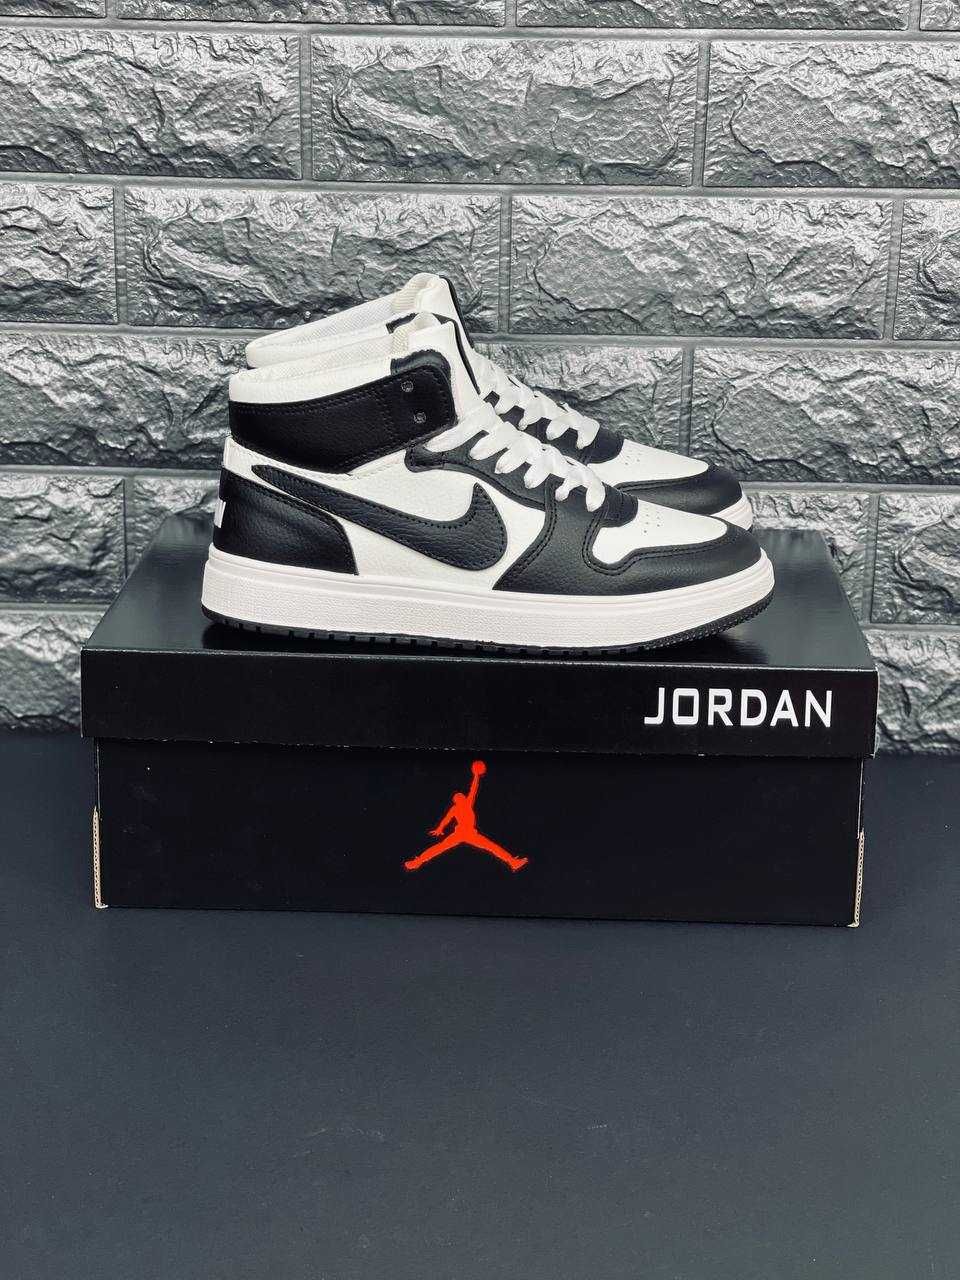 Скидка -80% Кроссовки Nike Air Jordan Black/White Кожаные Джордан